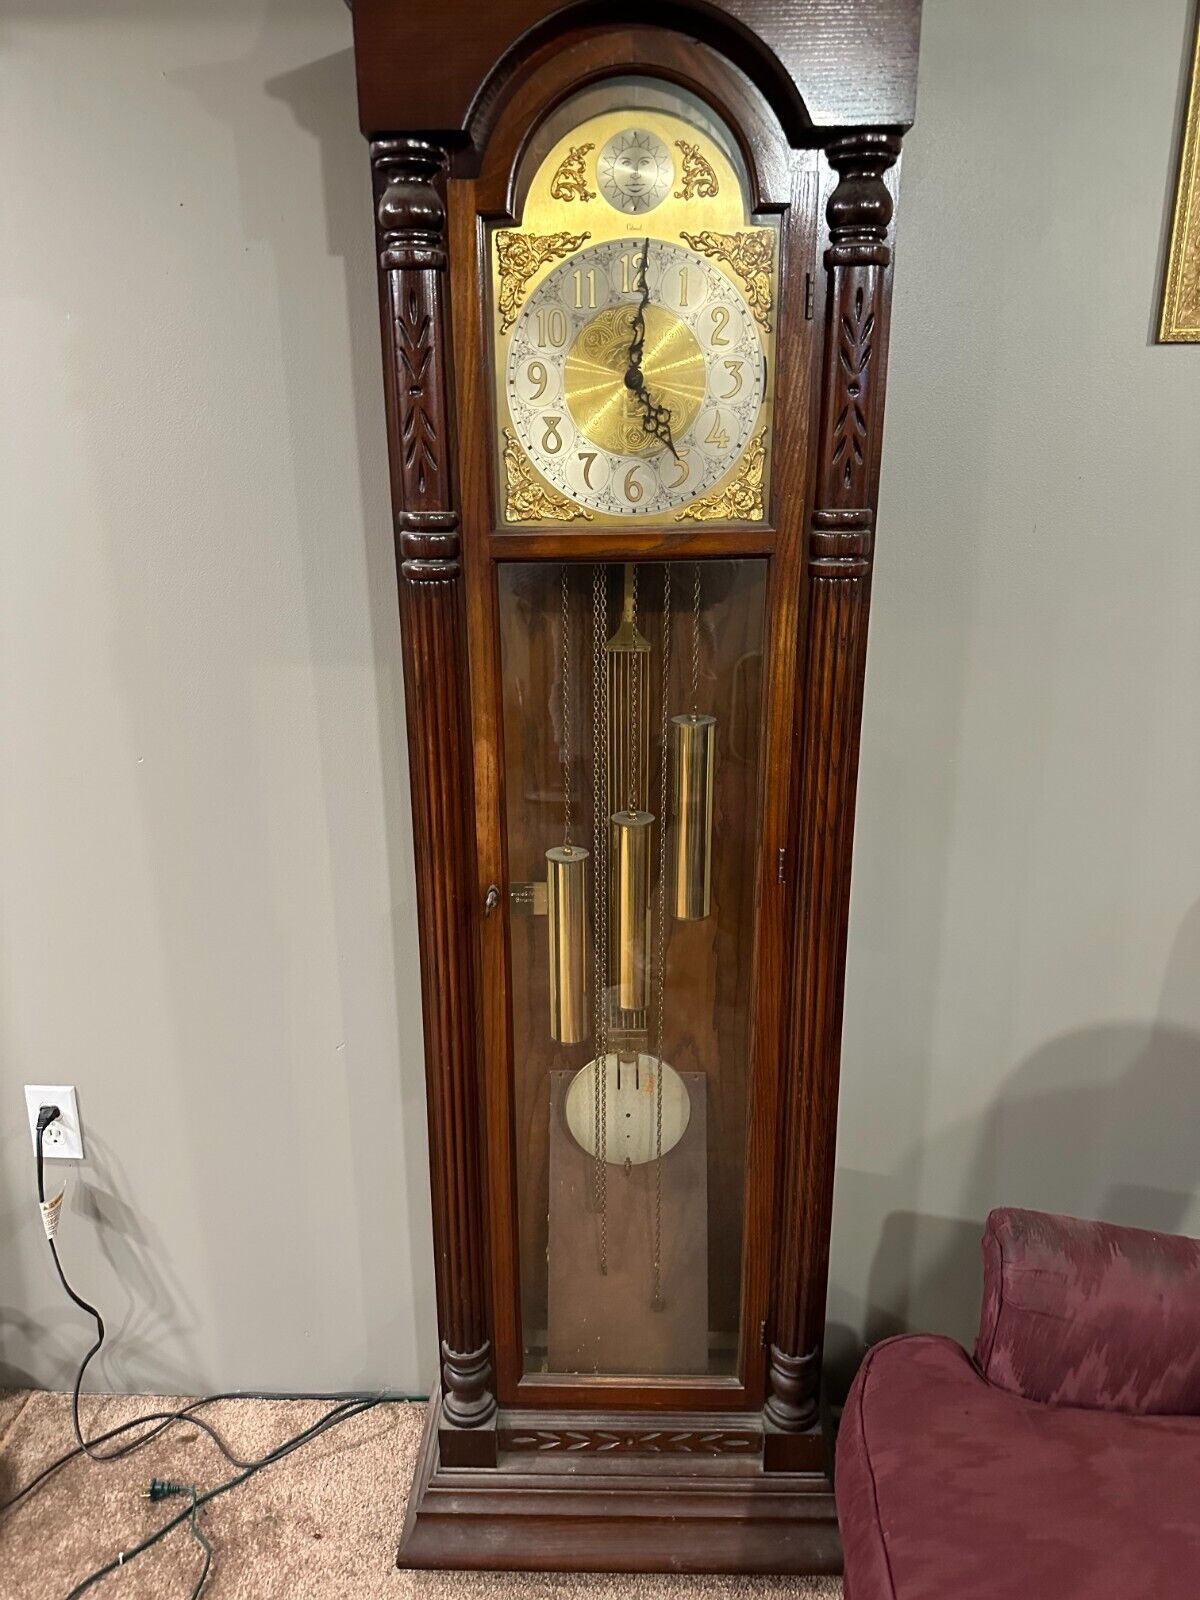 1979 Colonial Mfg. Co. Grandfather Clock model 6210